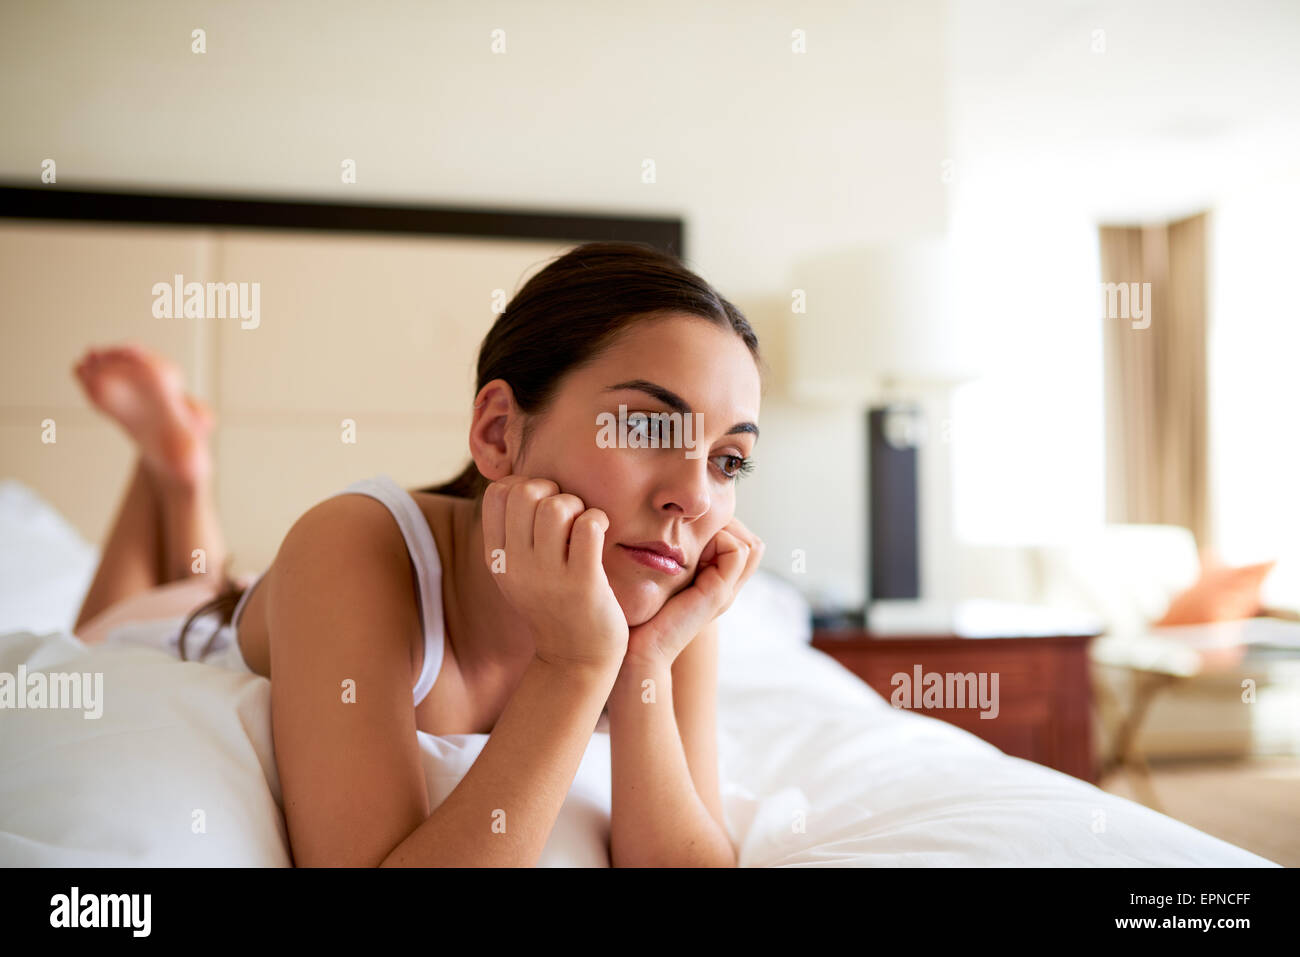 Attraktive Frau im Bett ruht Kinn in Hände schauen traurig. Stockfoto